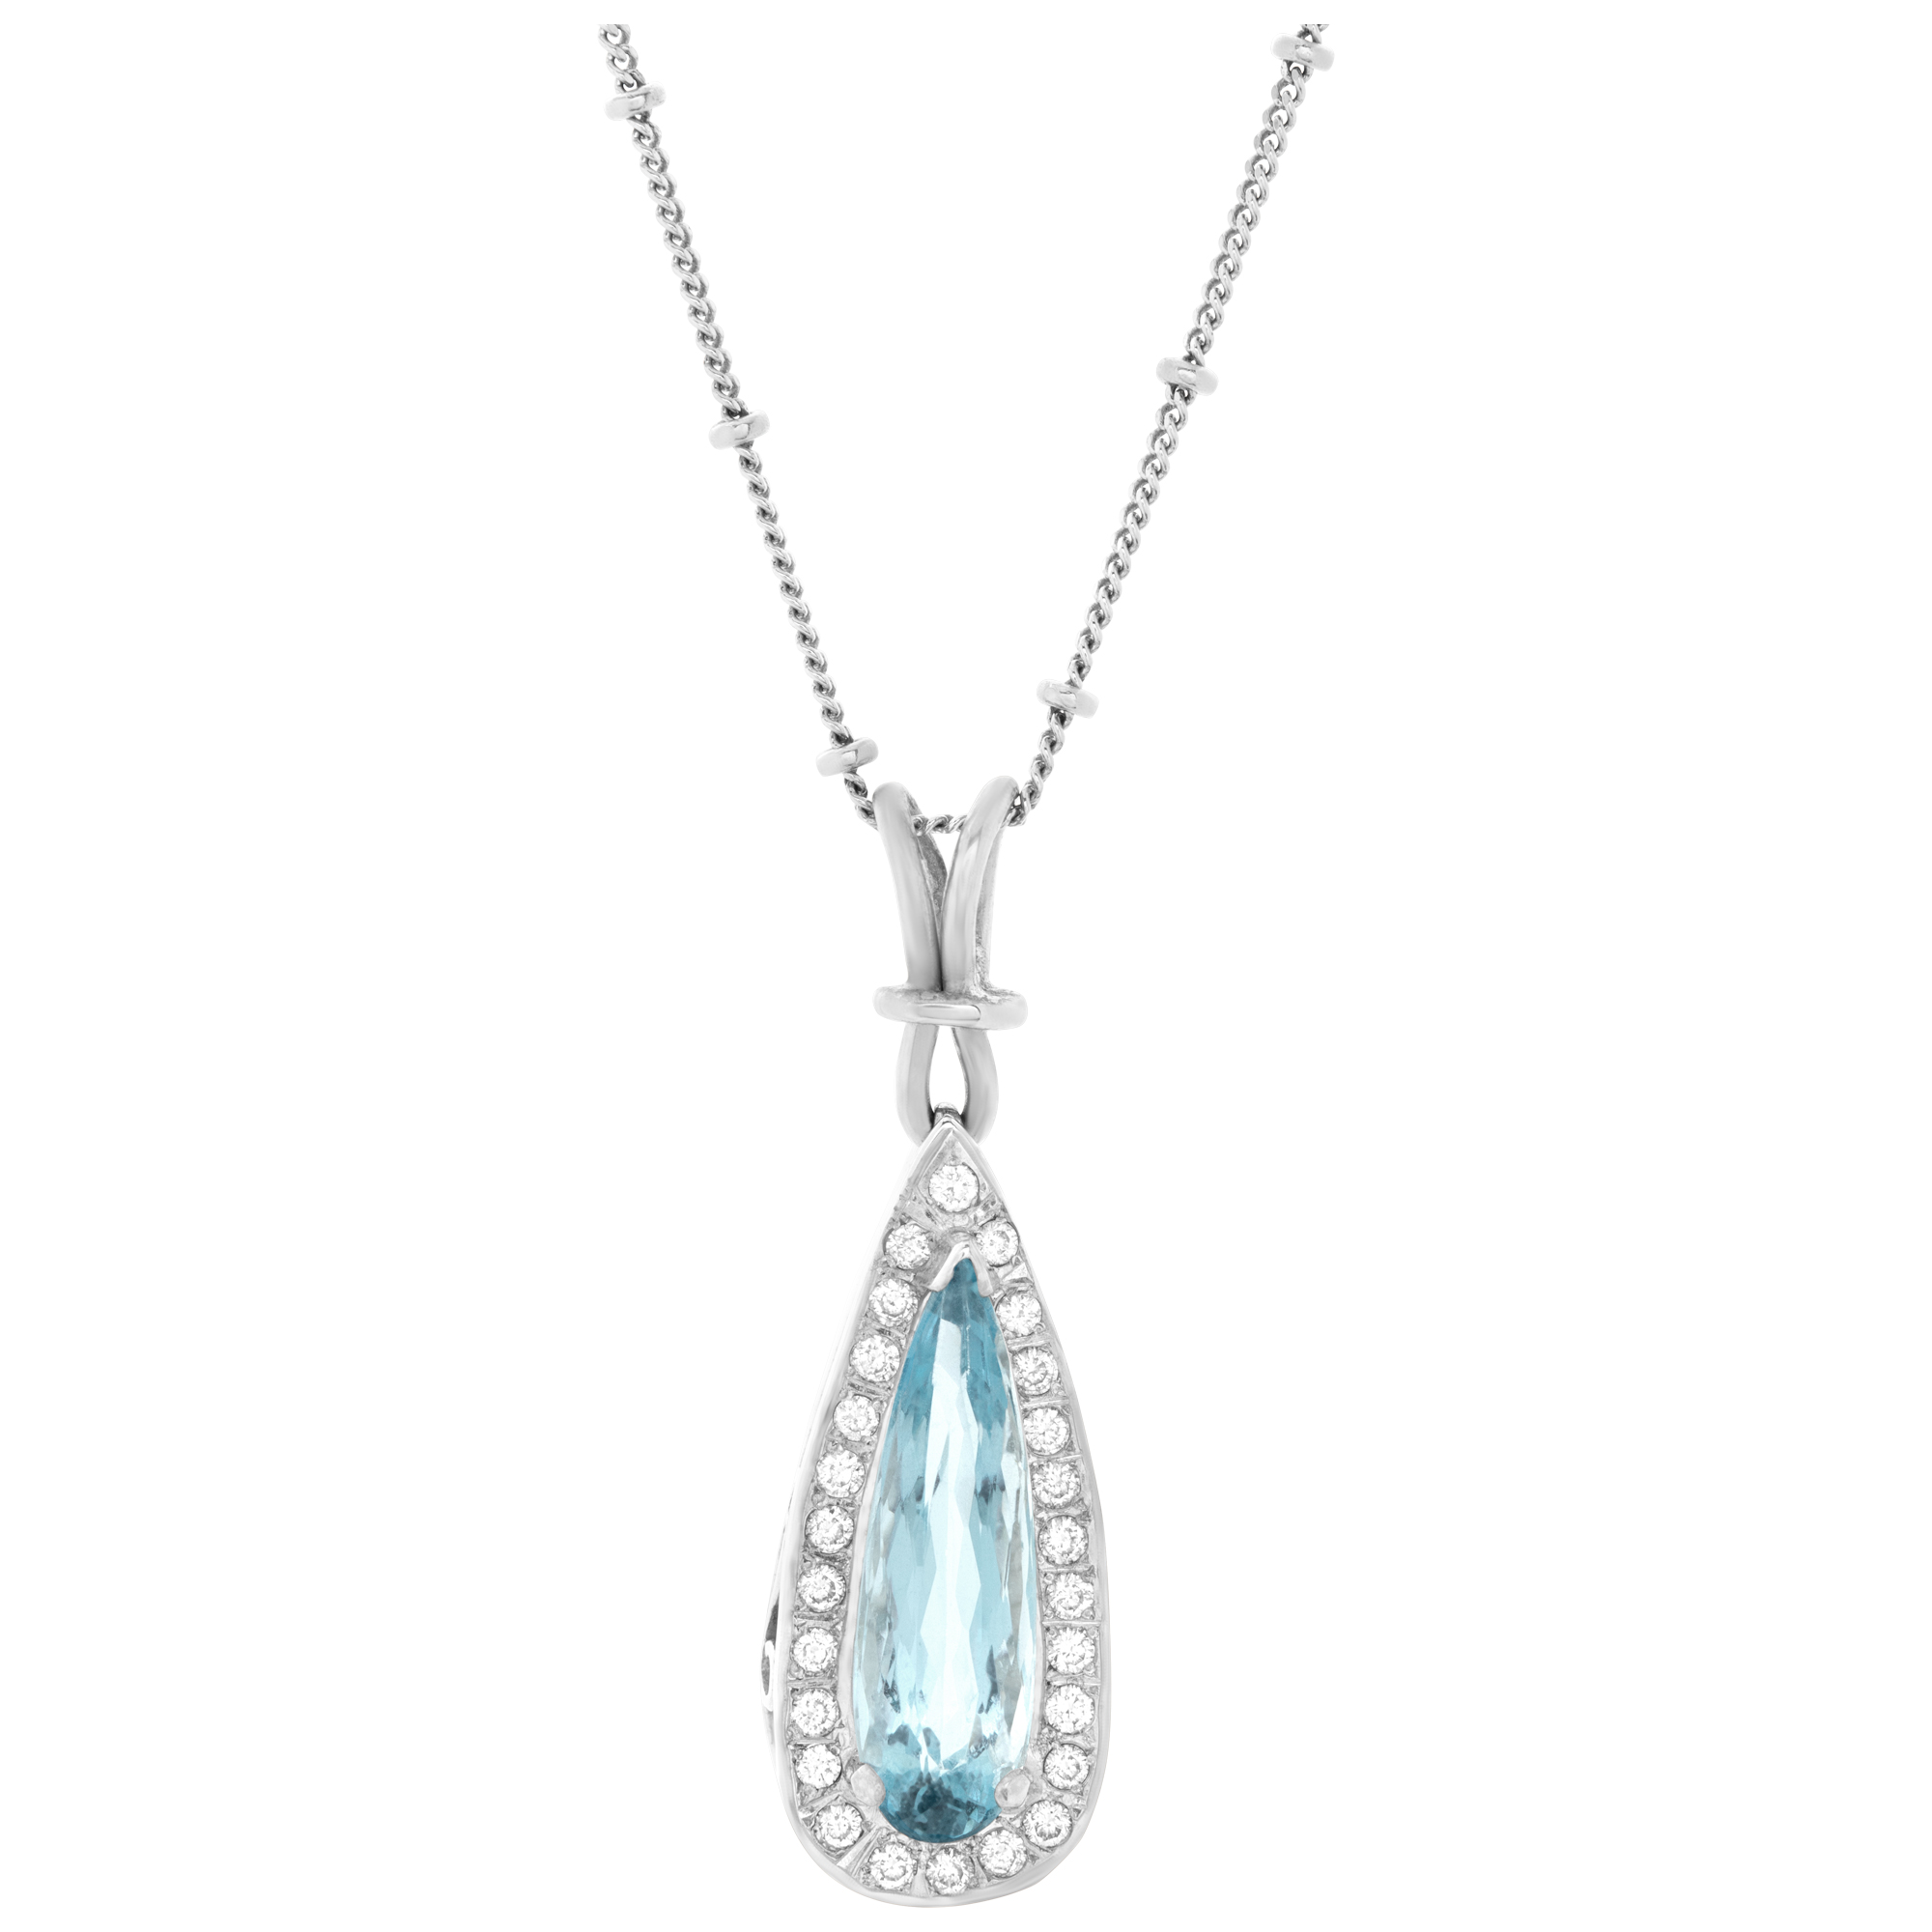 Brilliant cut pear shape blue topaz & diamonds pendant with 14k white gold chain. image 1